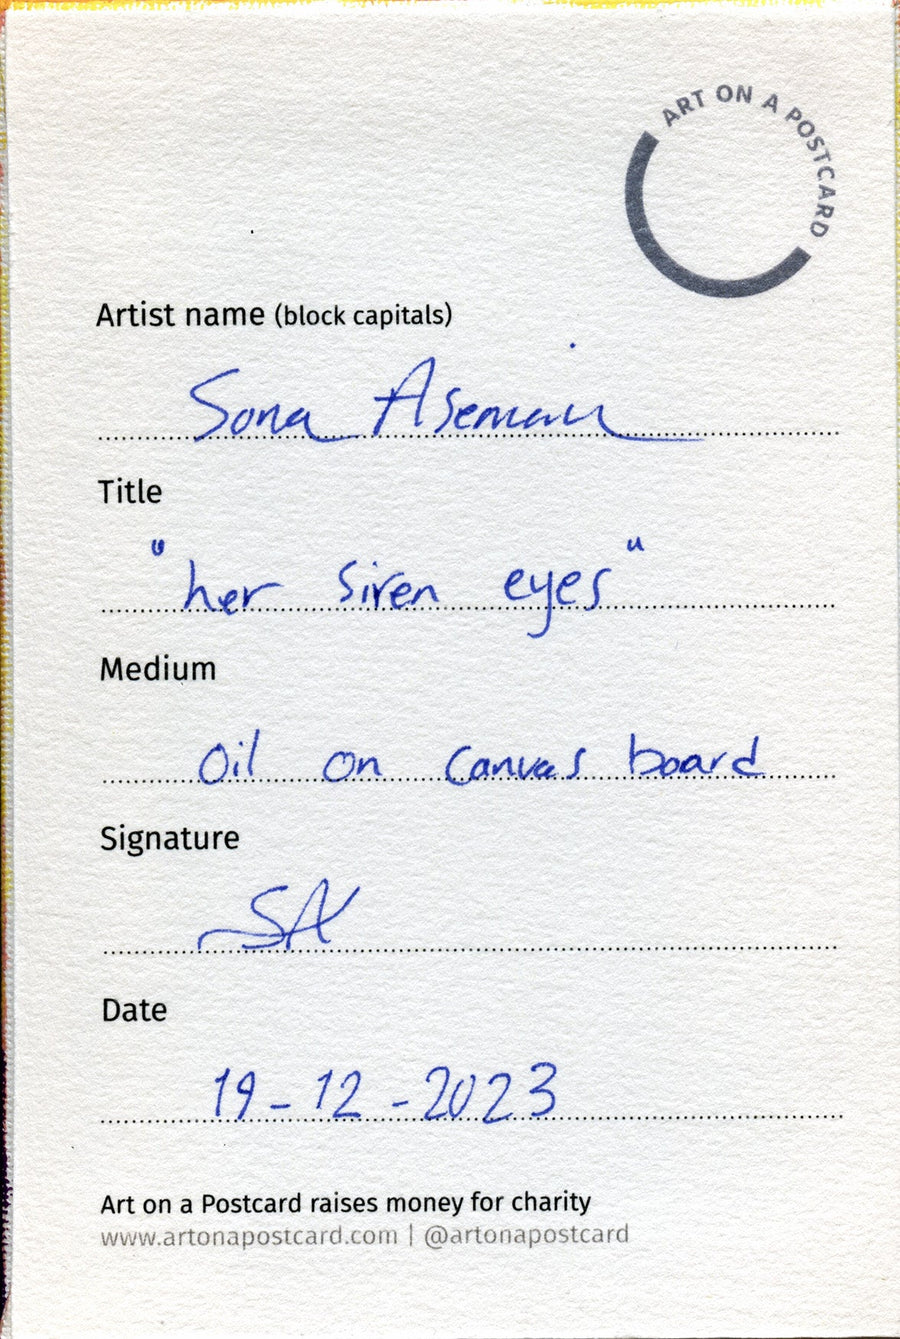 Lot 17 - Sona Asemani - Her Siren Eyes